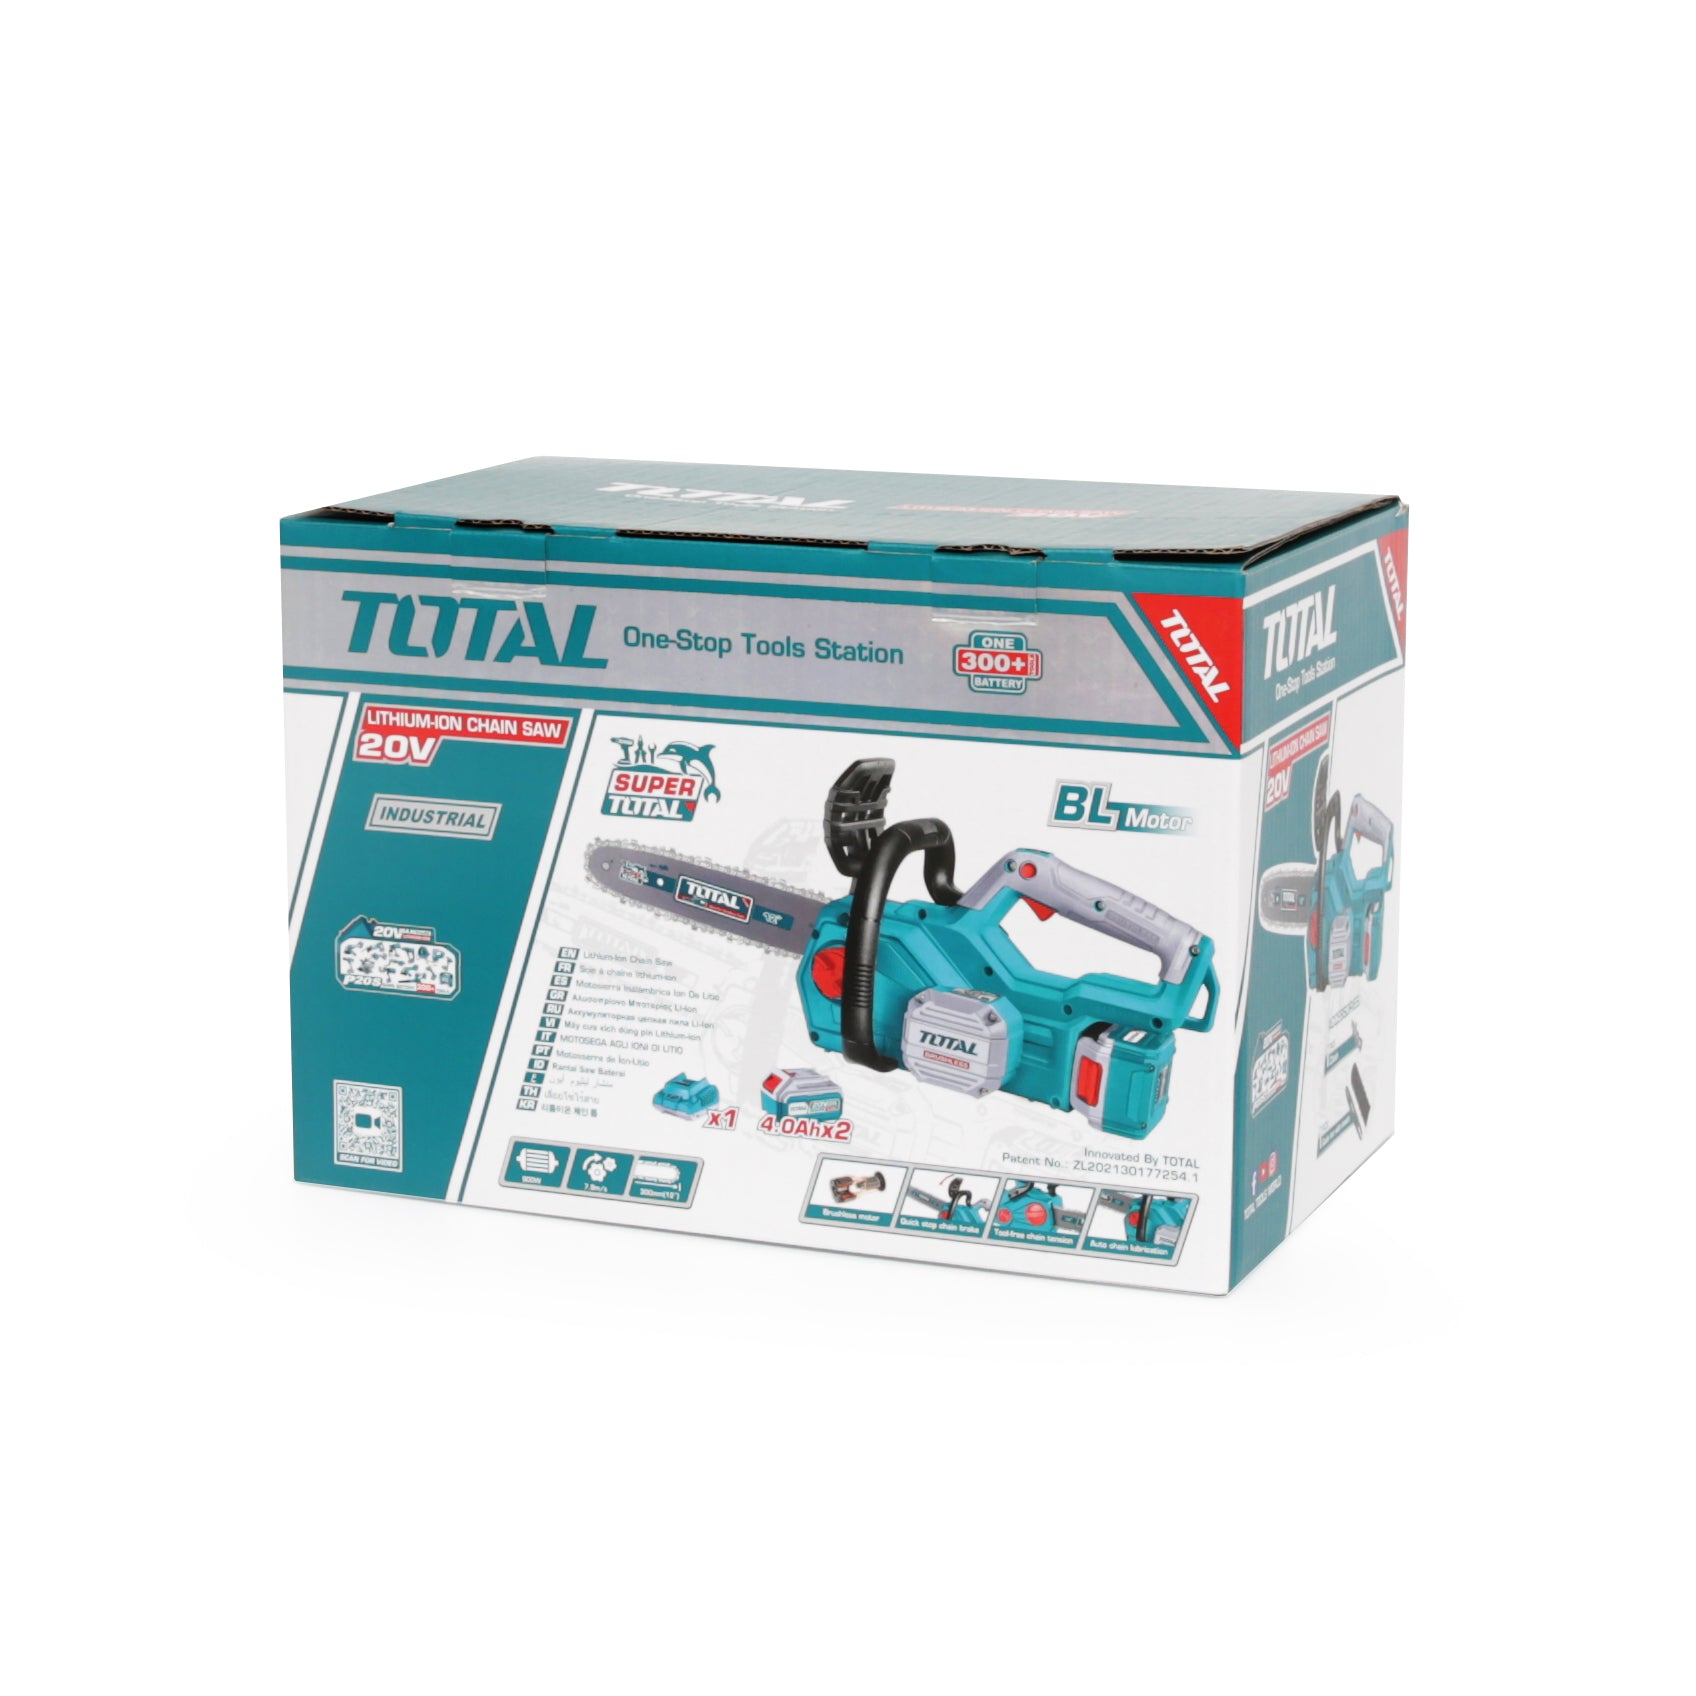 Total Li-Ion 20V Chain Saw (with 2 x Batteries & Charger) - TGSLI201286